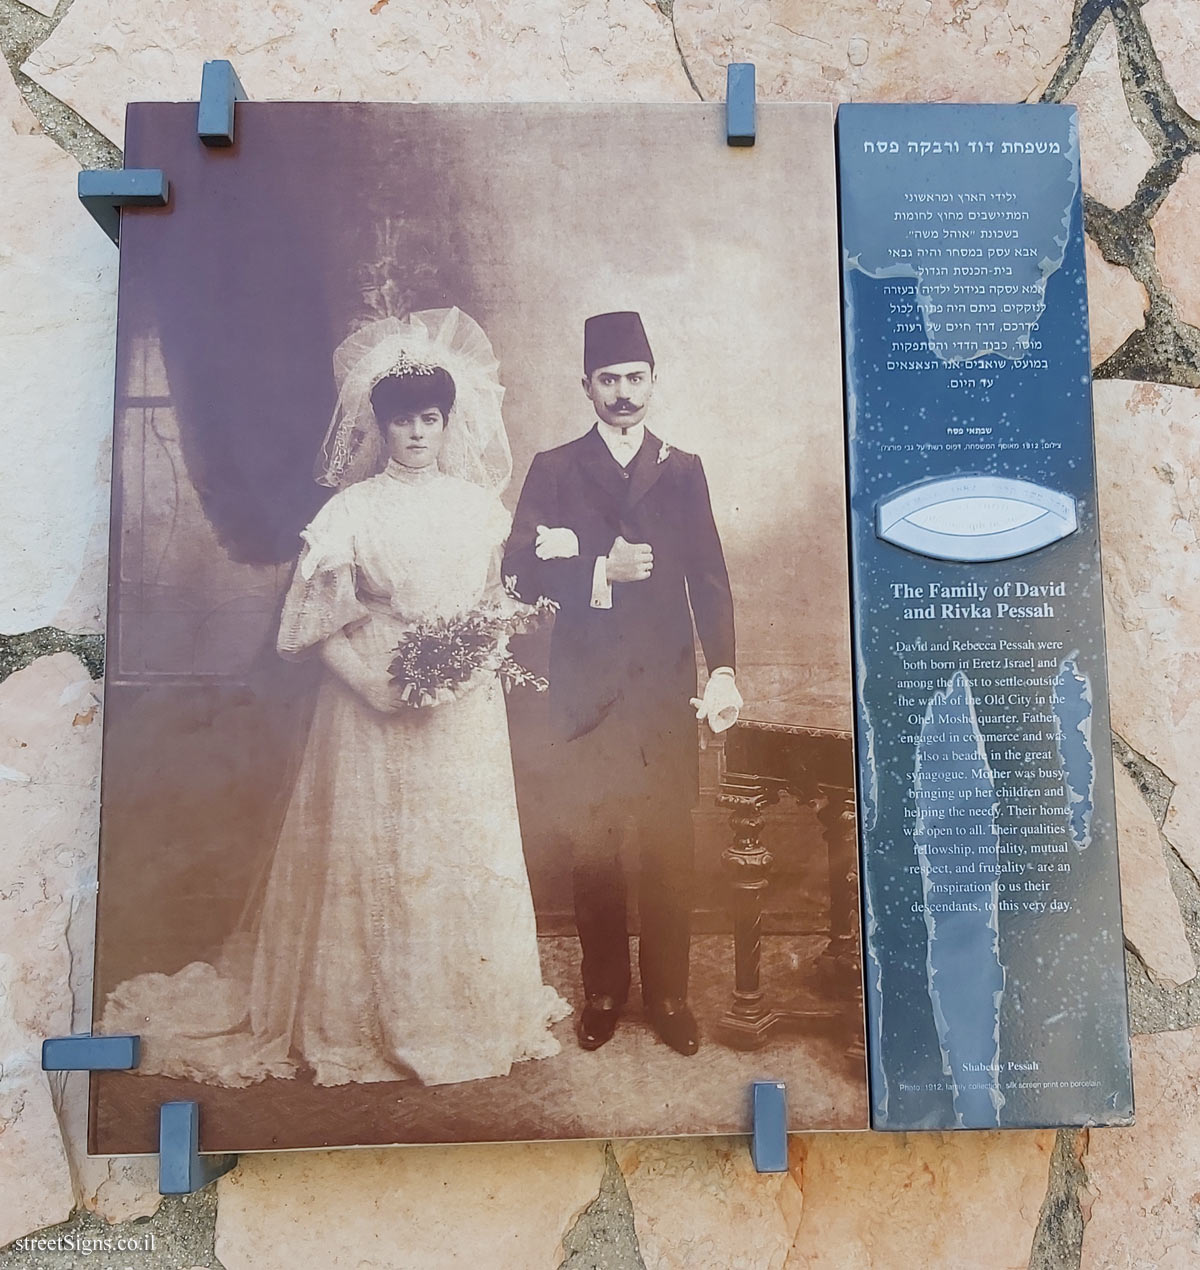 Jerusalem - Photograph in stone - The Family of David and Rivka Pessah